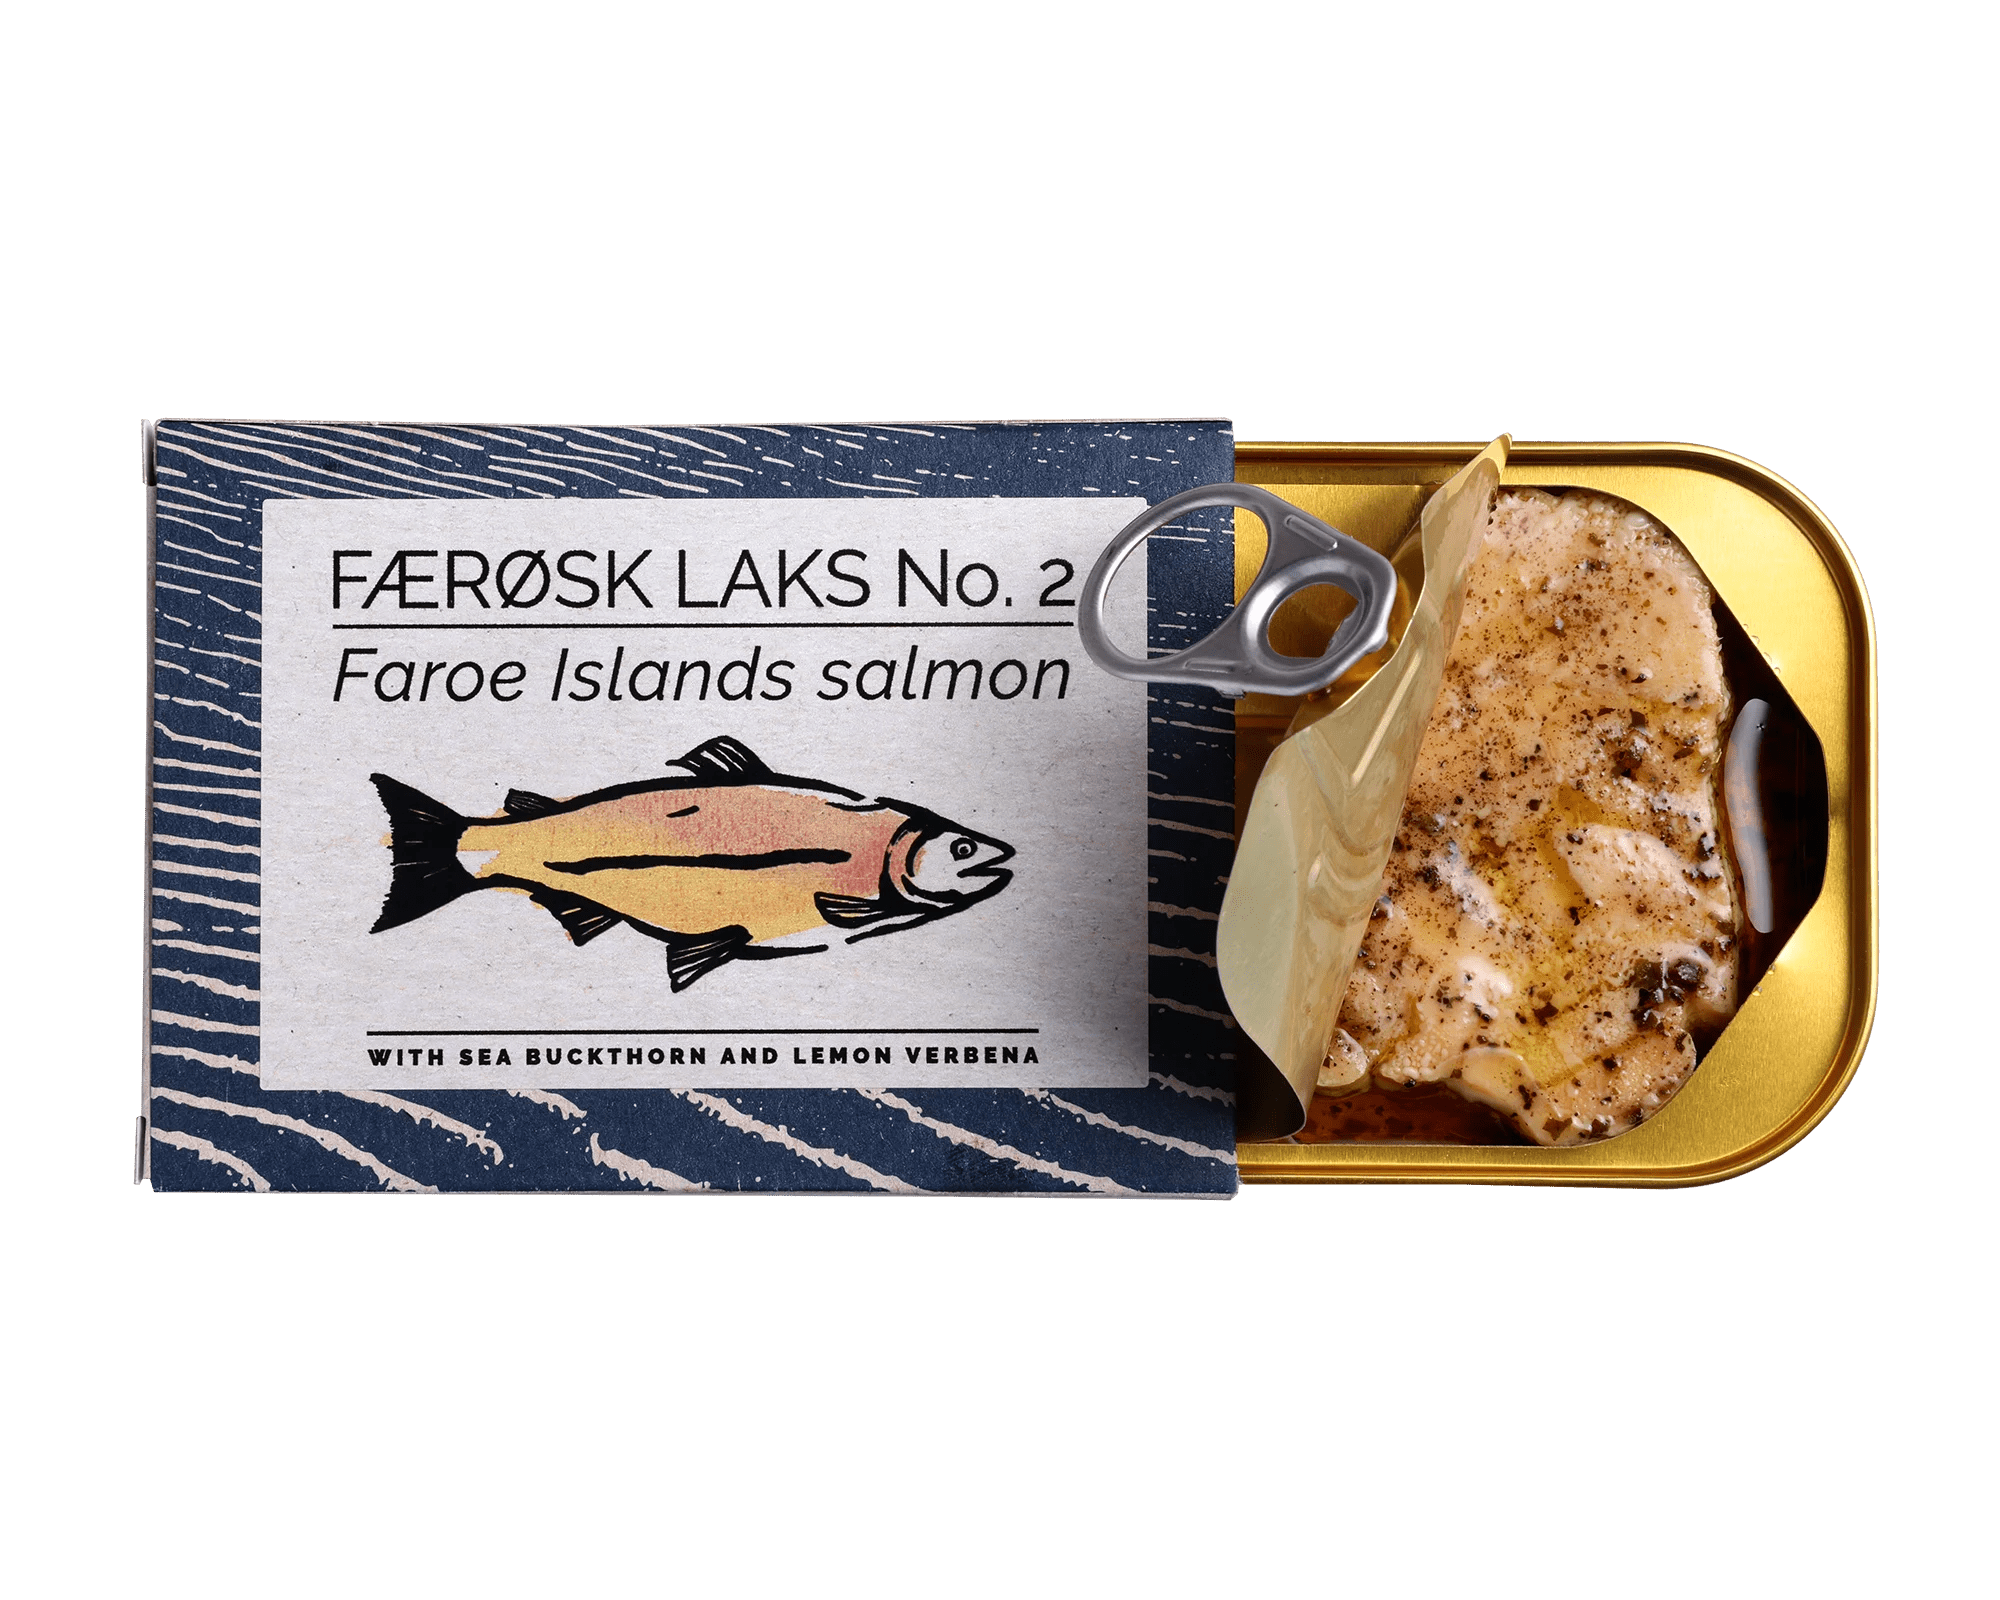 FÆRØSK LAKS No. 2 - FANGST